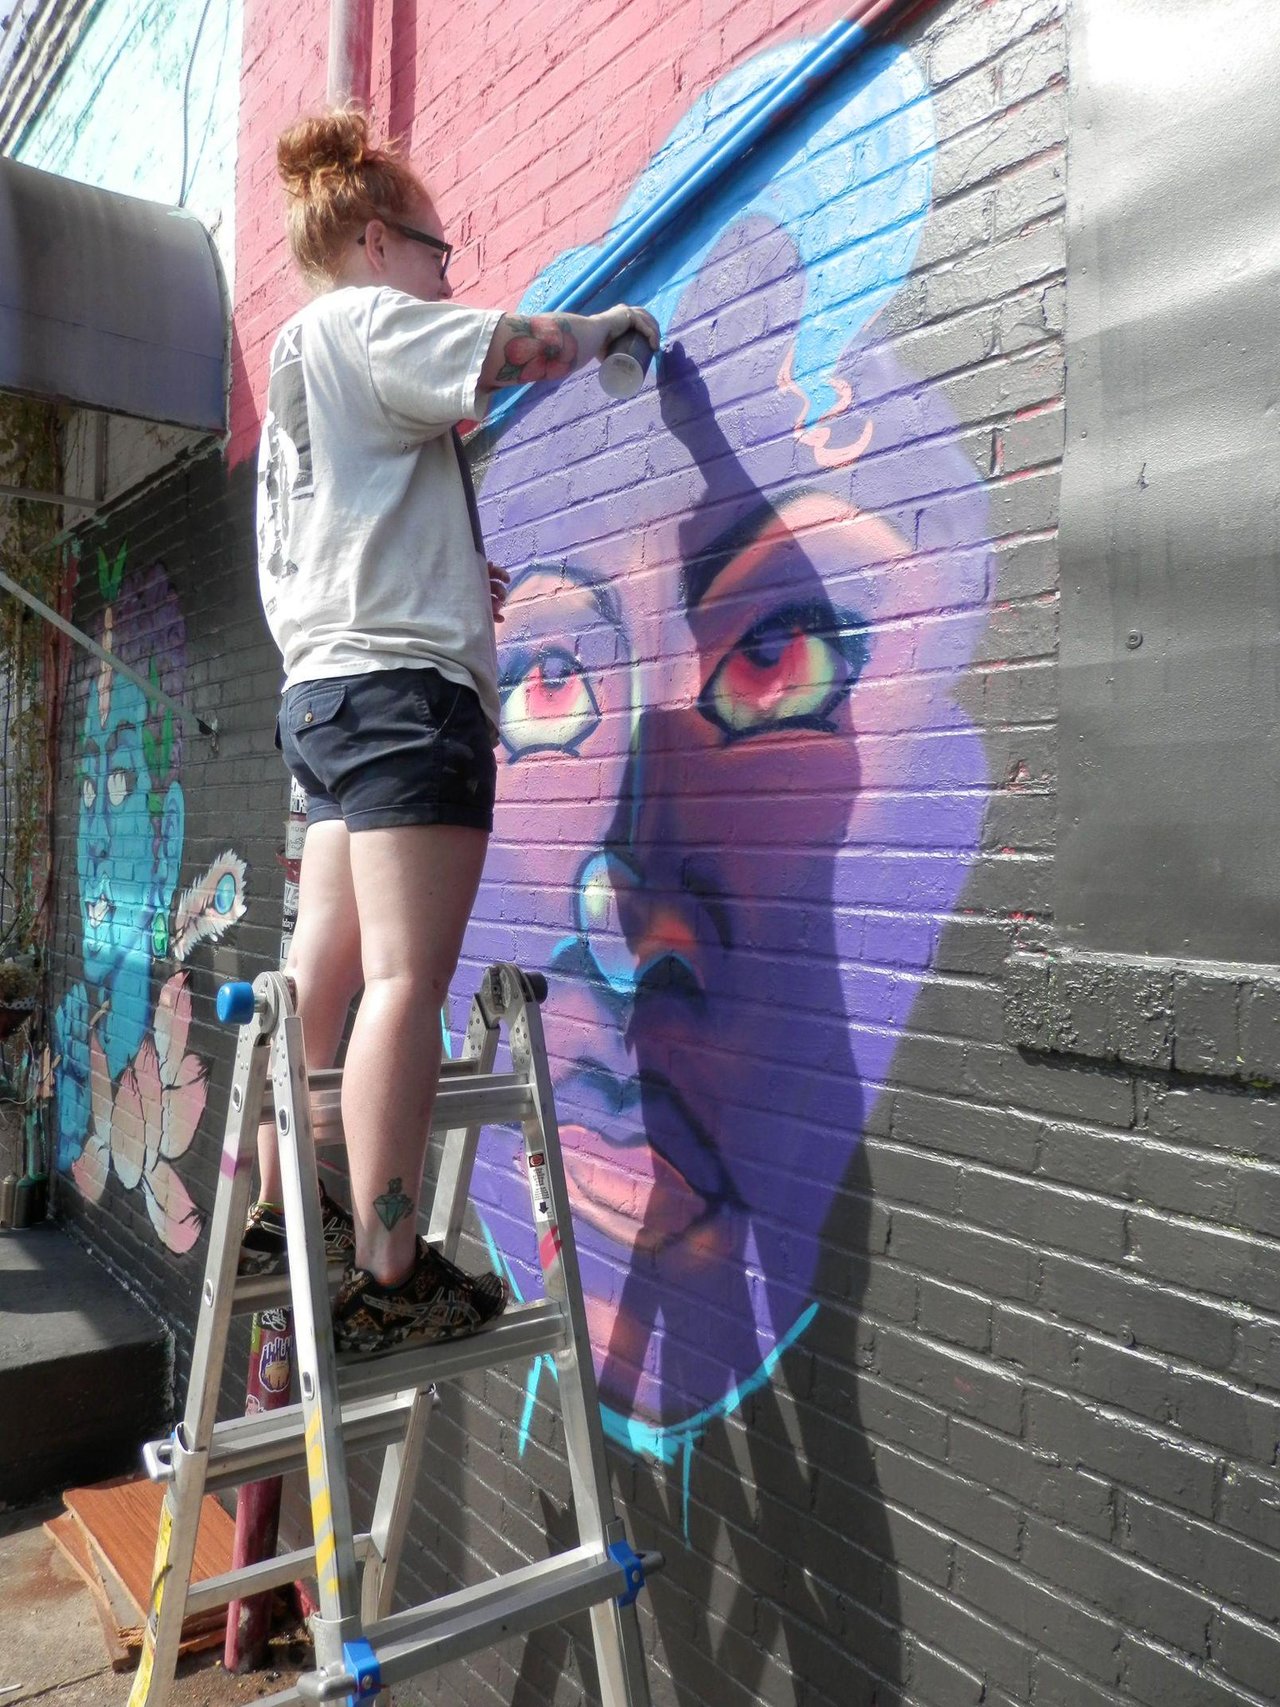 RT @JohnRMoffitt: #Houston #Graffiti #Streetart Clear (Houston) working on her art at Super Happy Funland for Meeting of Styles 2015. http://t.co/T5Y47Jcs6T